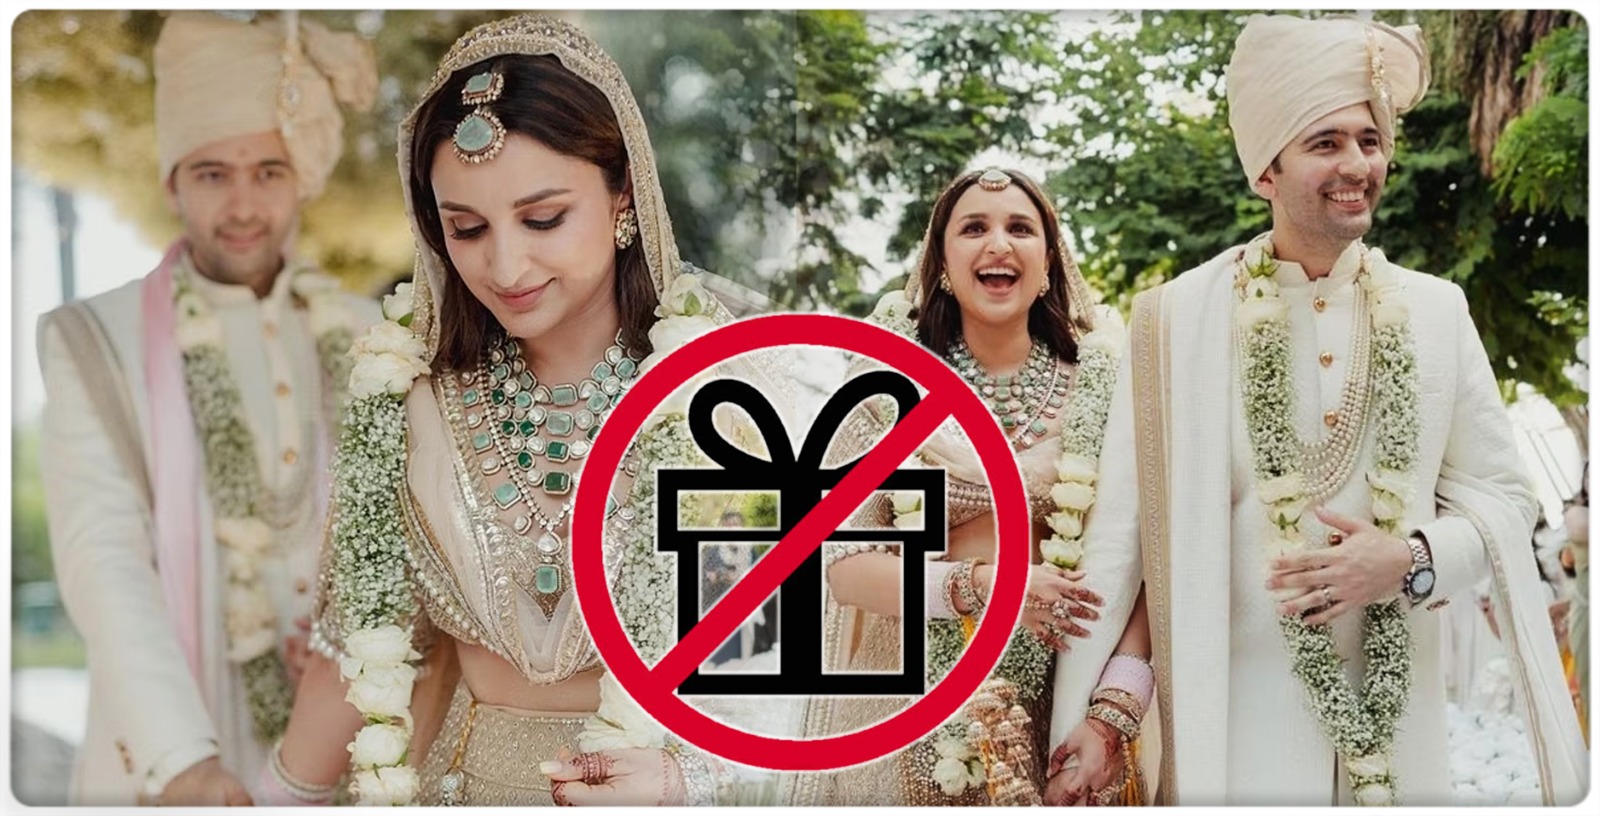 parineeti-raghav-imposed-no-gifts-policy-at-their-wedding